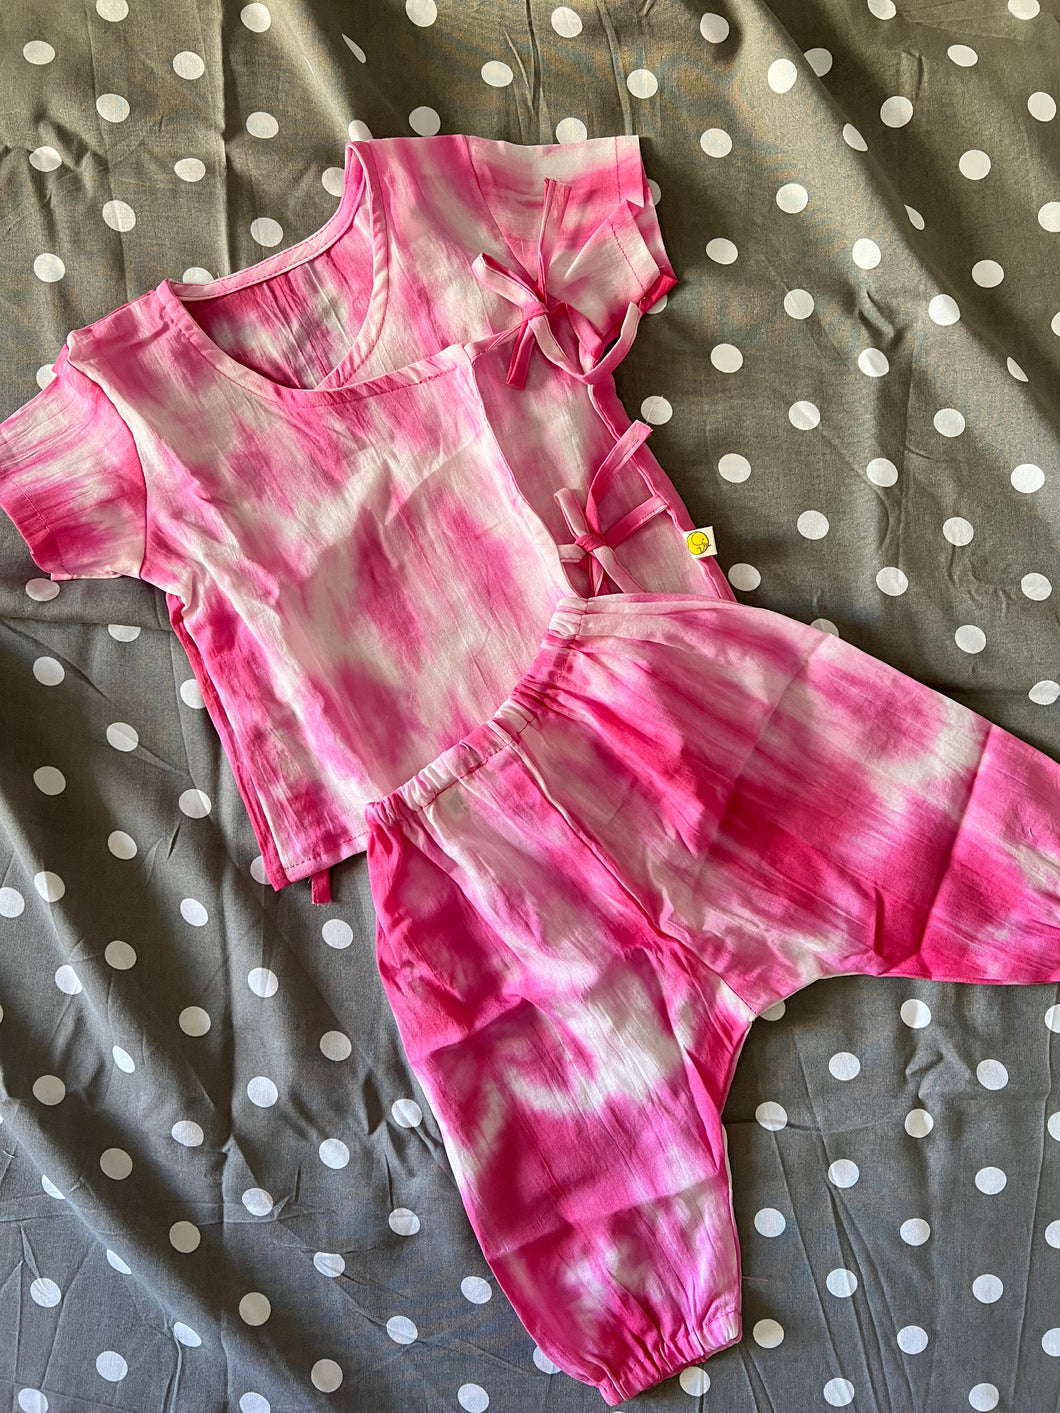 Unisex Newborn Jhabla Set - Pink Shibori  (0-4 Months)